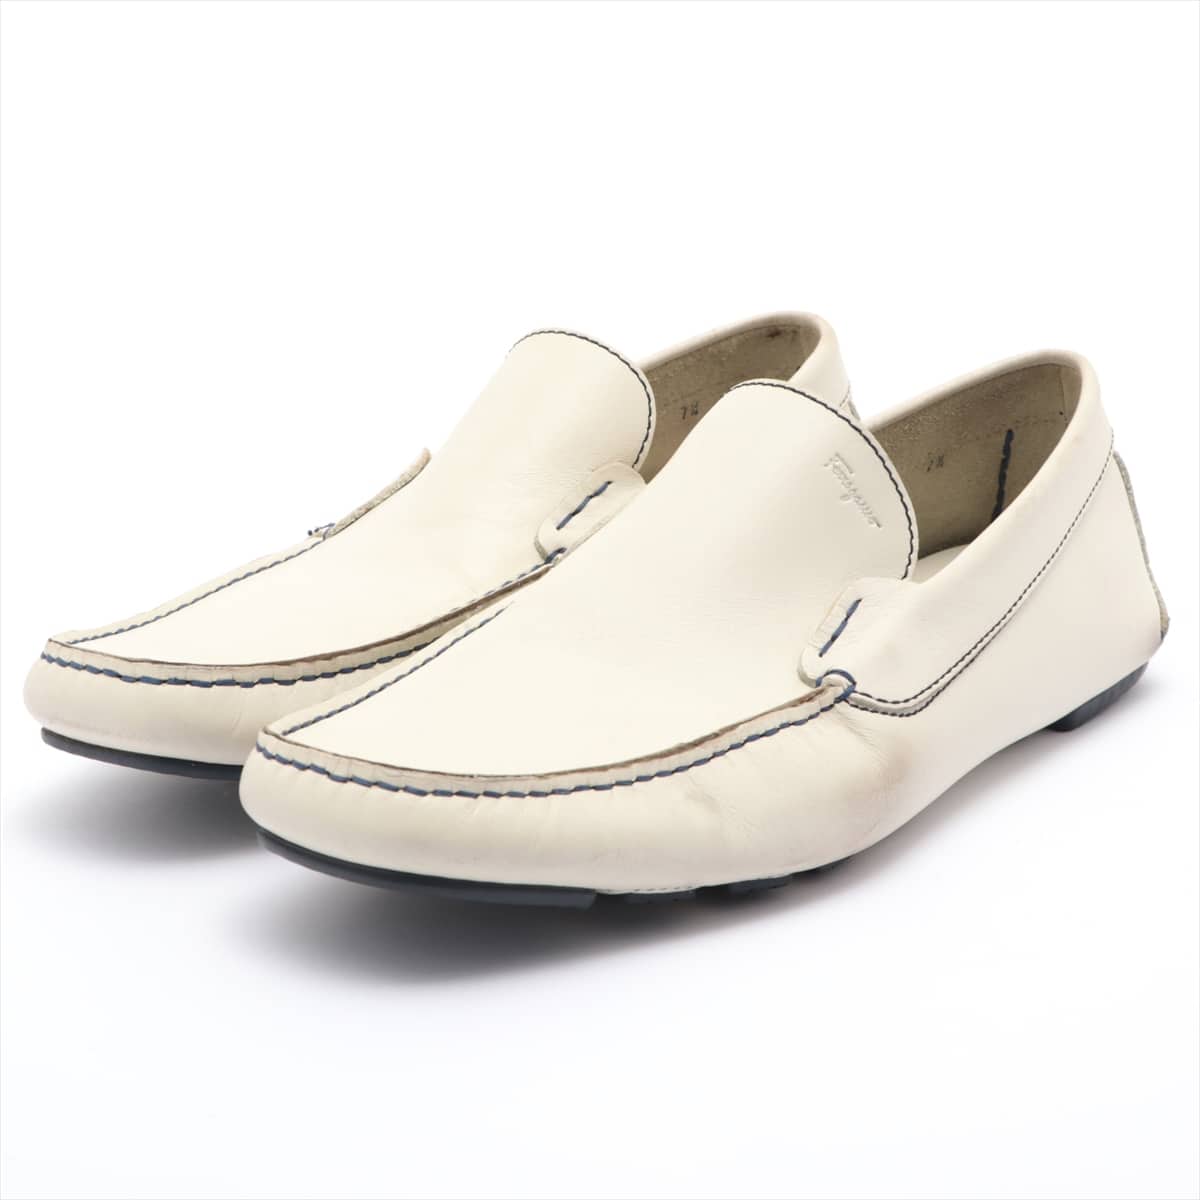 Ferragamo Leather Driving shoes 7 1/2 Men's White